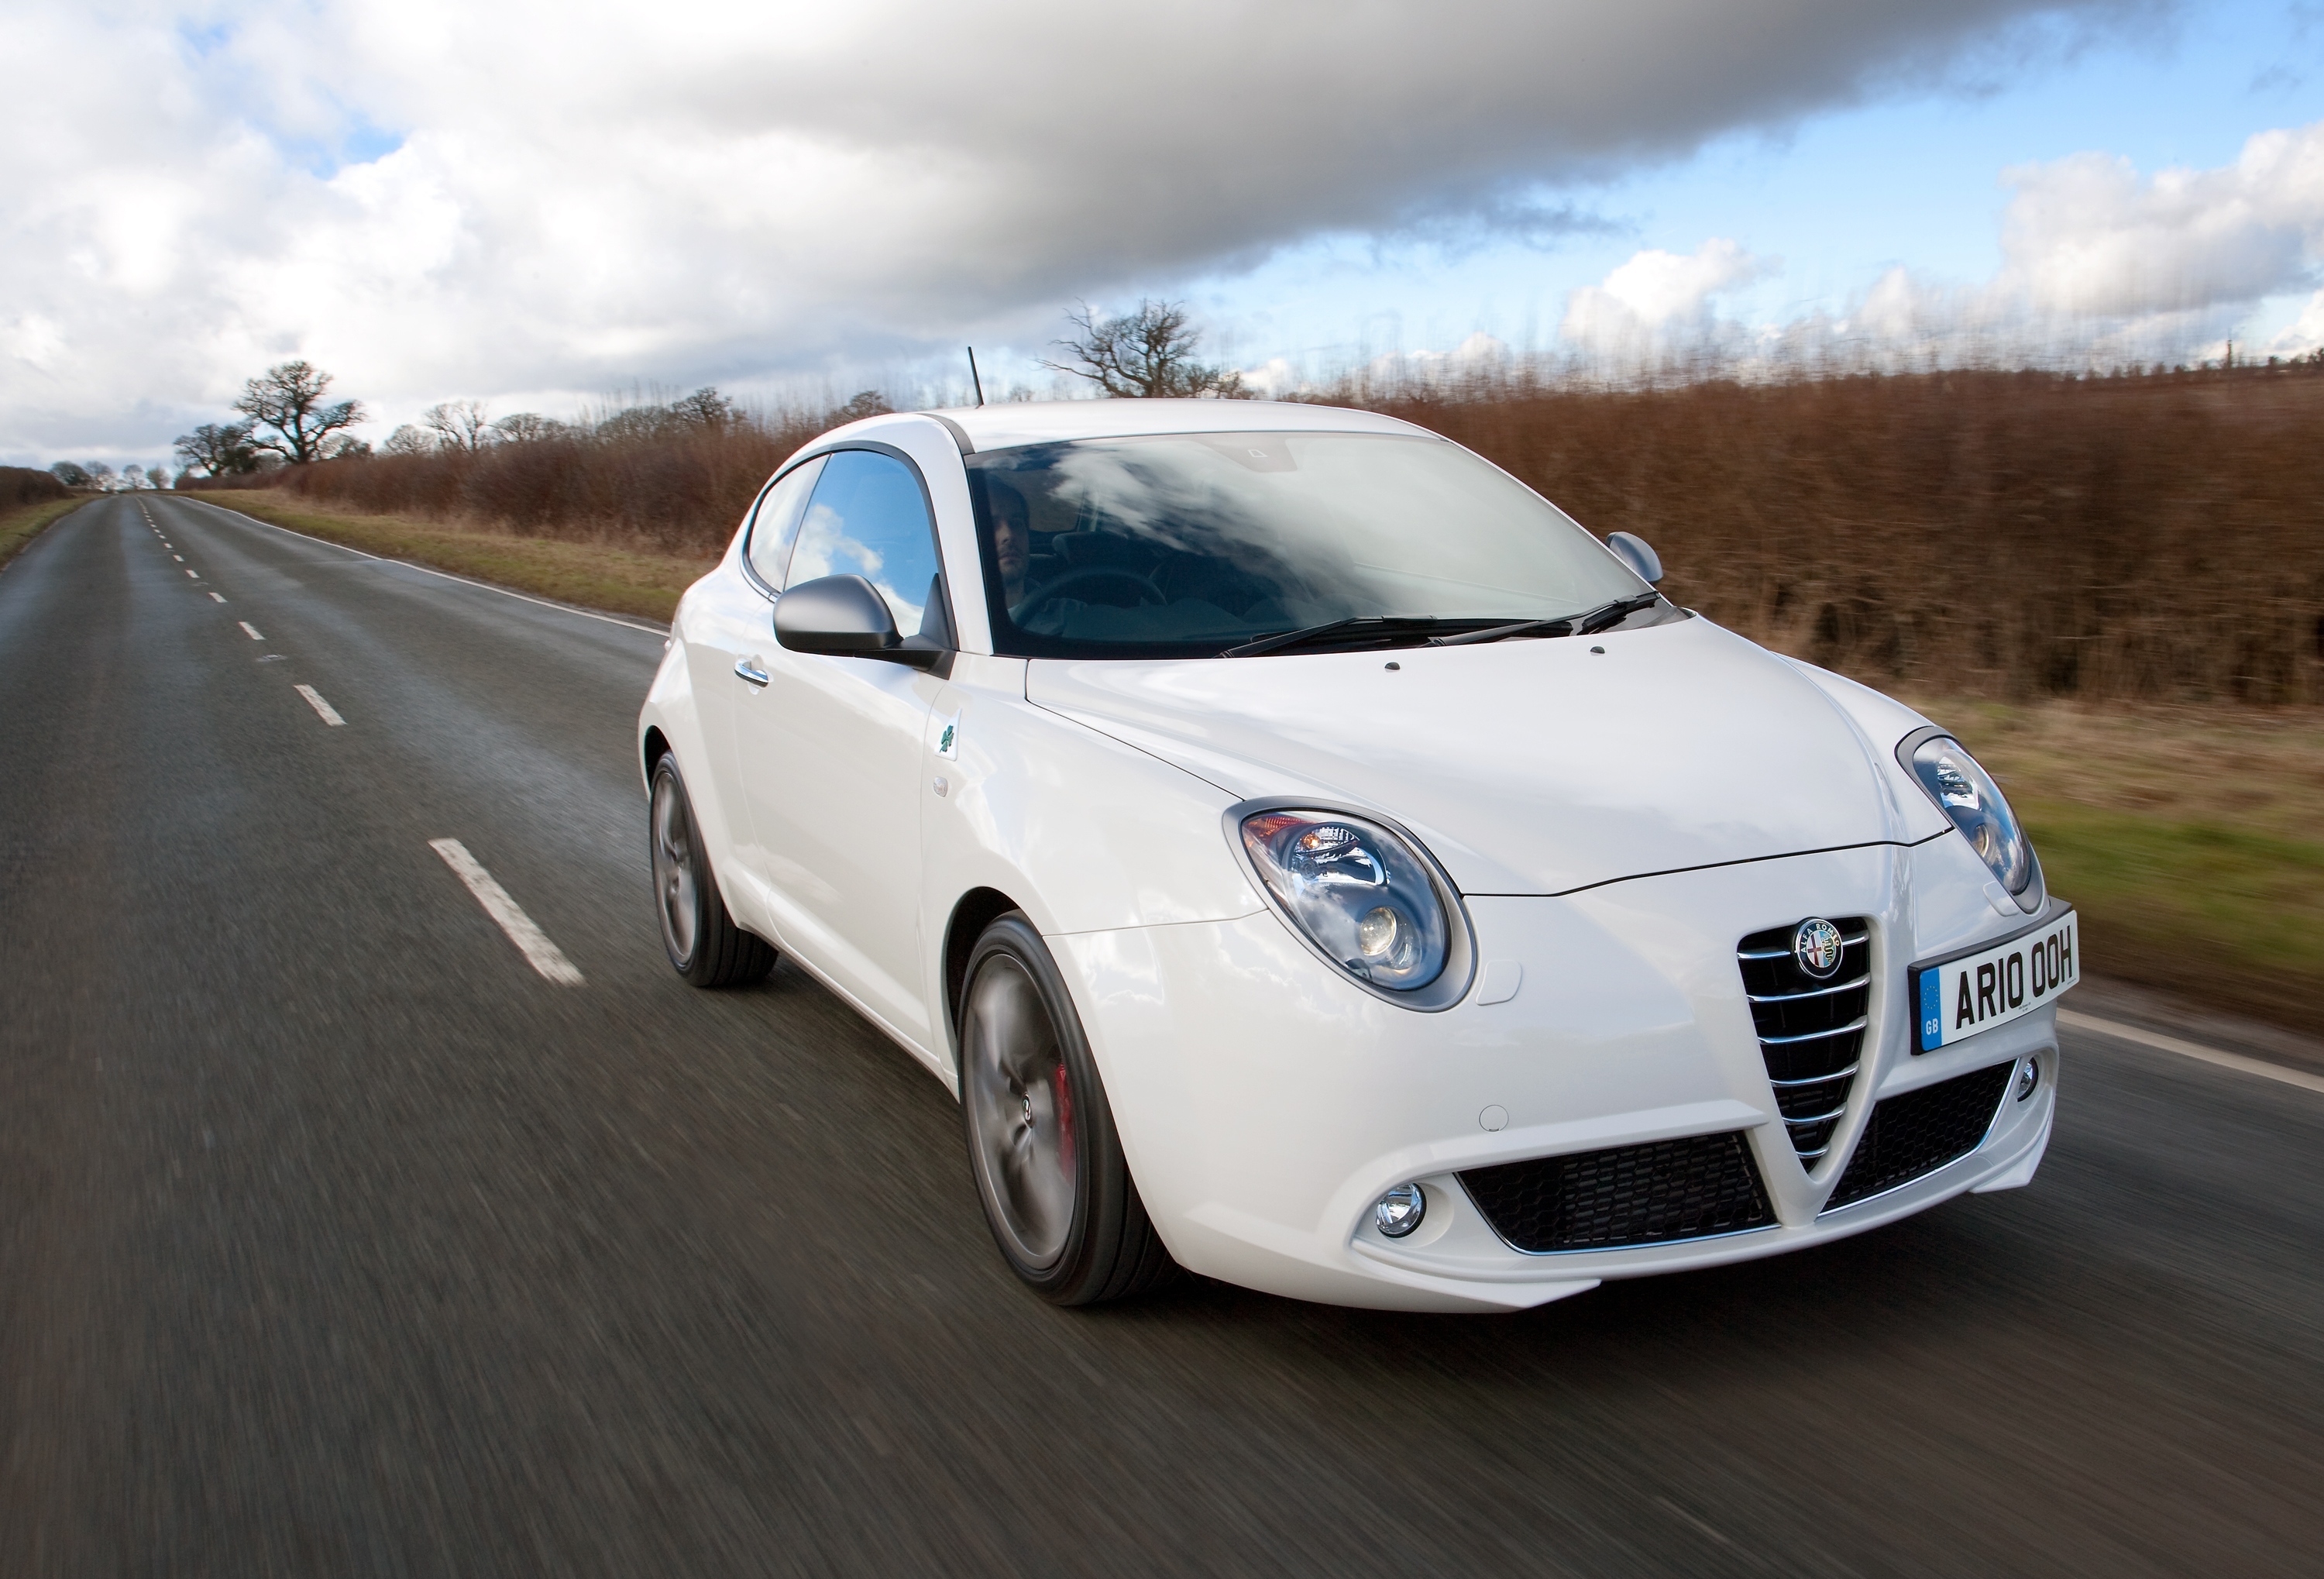 https://carwriteups.co.uk/wp-content/uploads/2012/02/Alfa-Romeo-MiTo-on-the-road.jpg